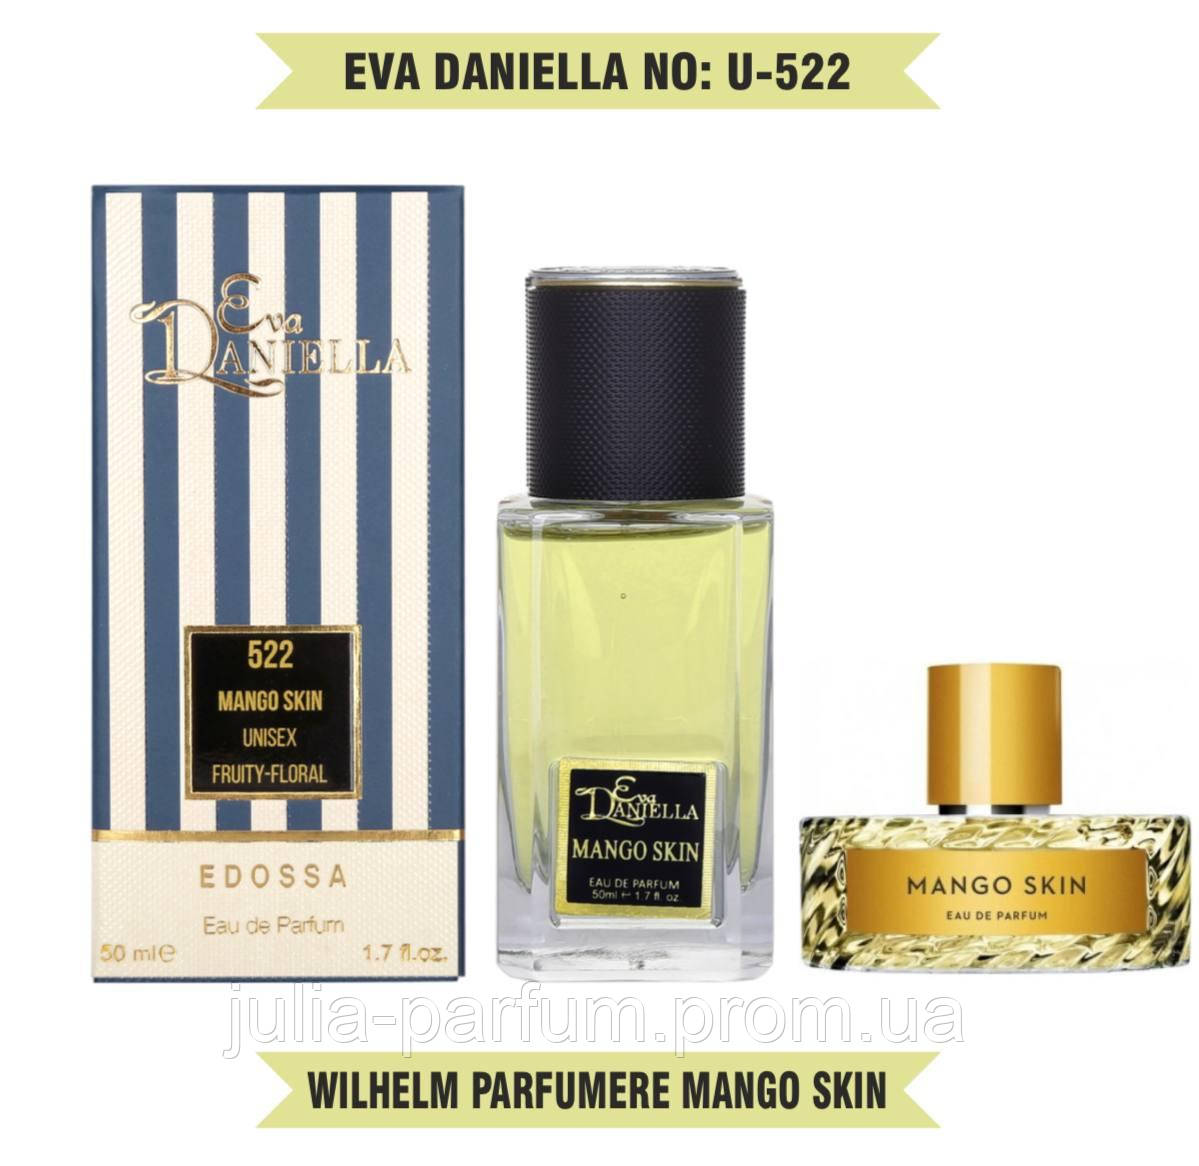 Парфюм Eva Daniella Mango Skin 50мл (Аналог Vilhelm Parfumerie Mango Skin)